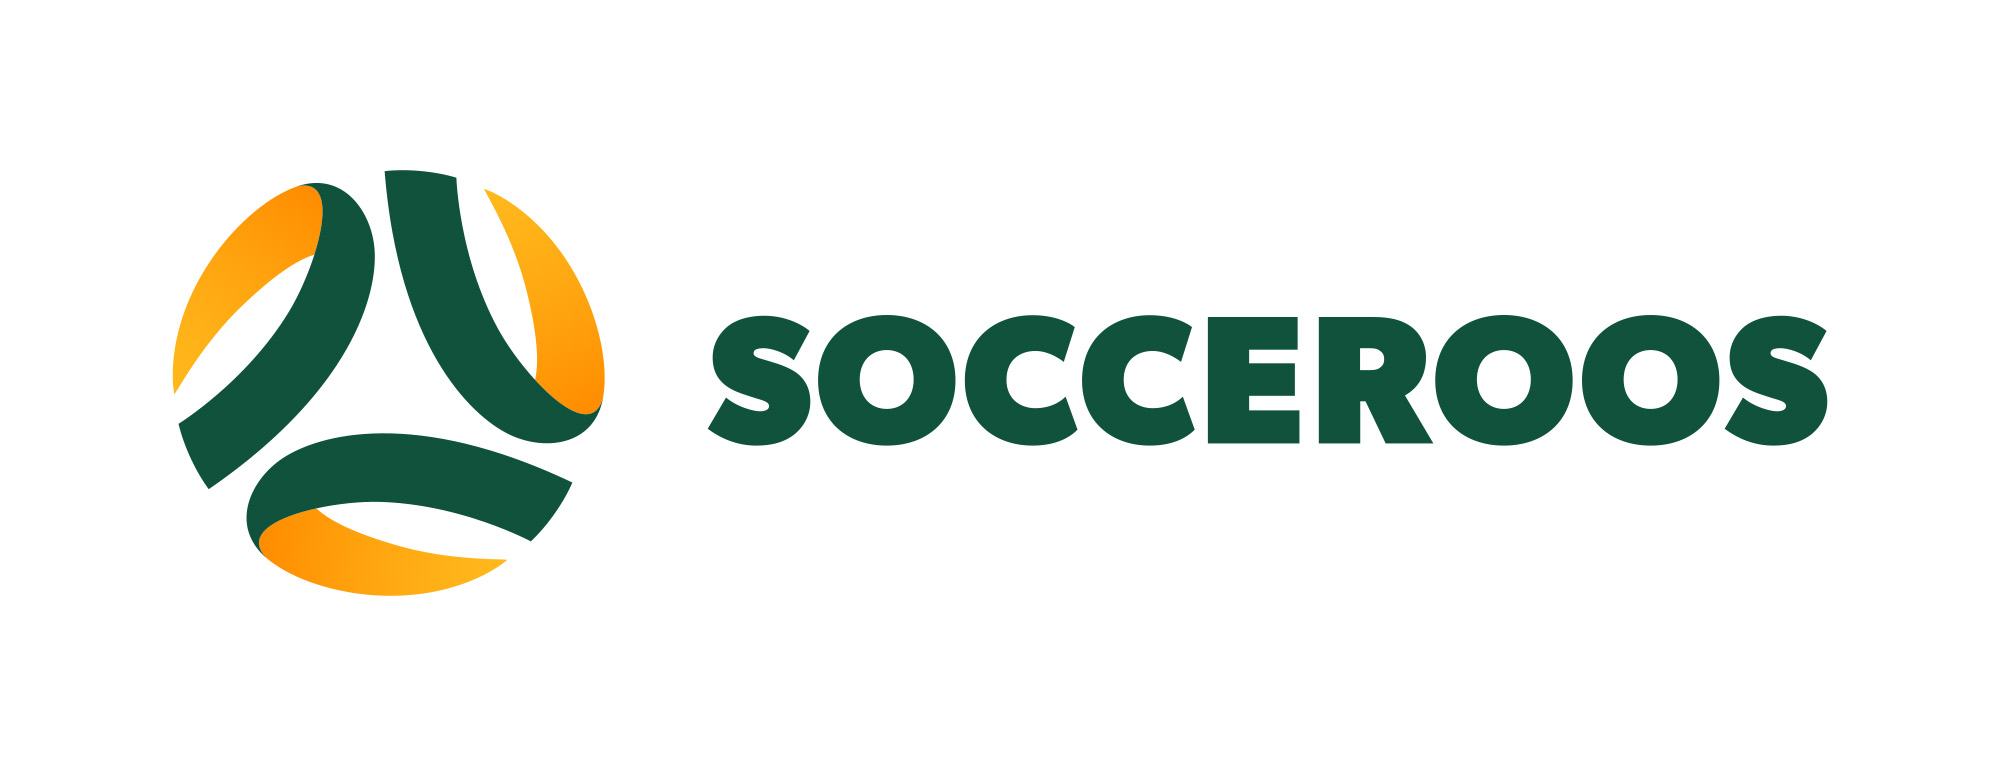 2021 Socceroos logo